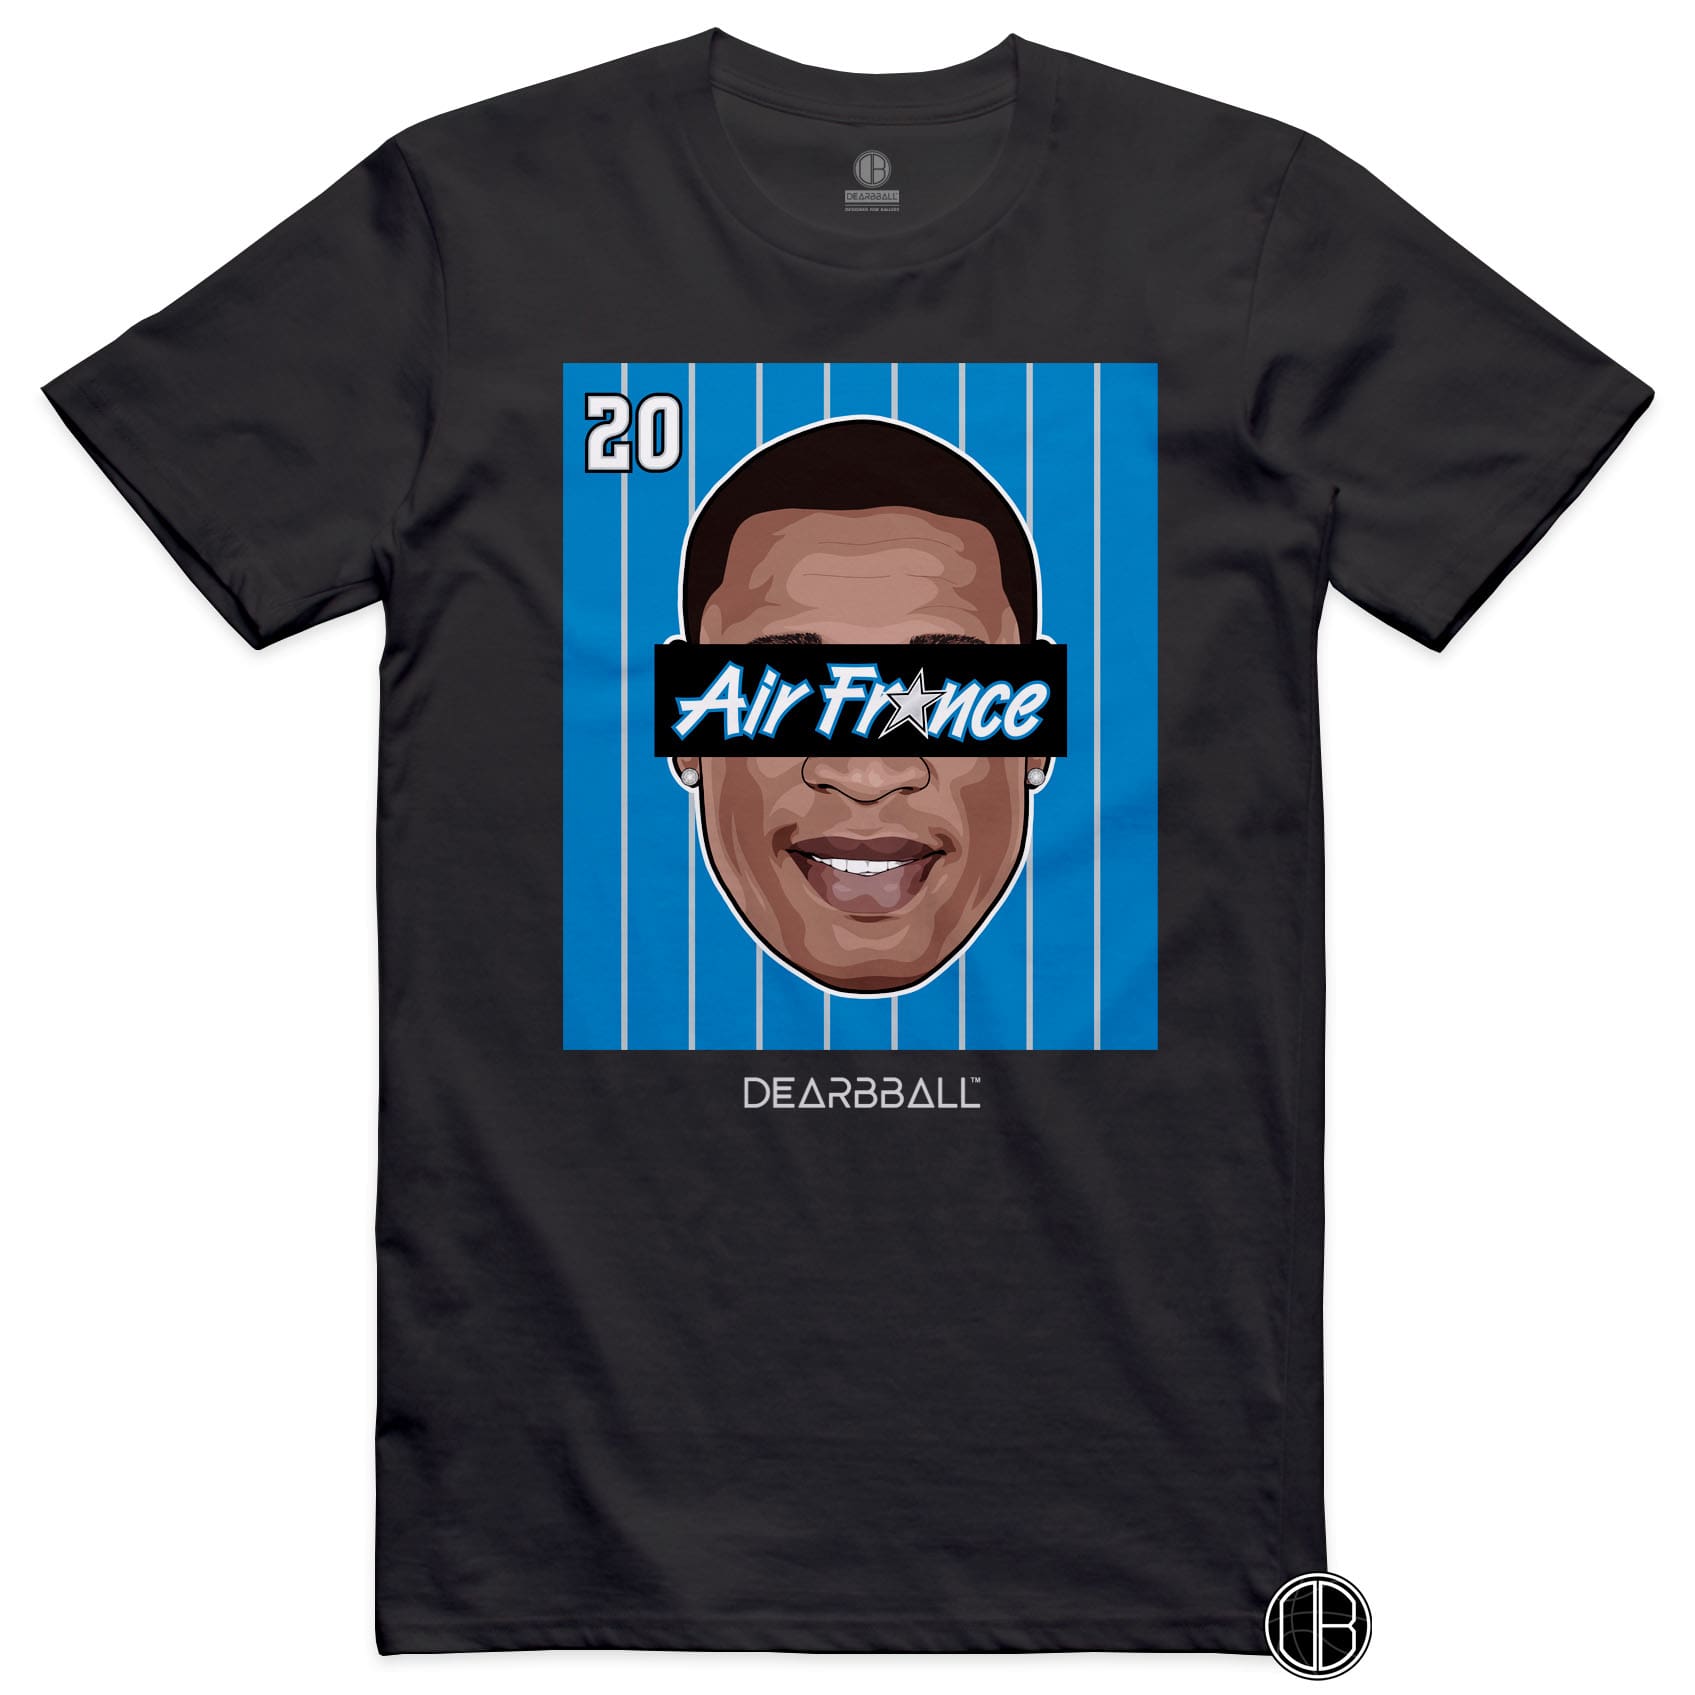 DearBBall T-Shirt - AirFrance 20 Orlando Throwback Edition